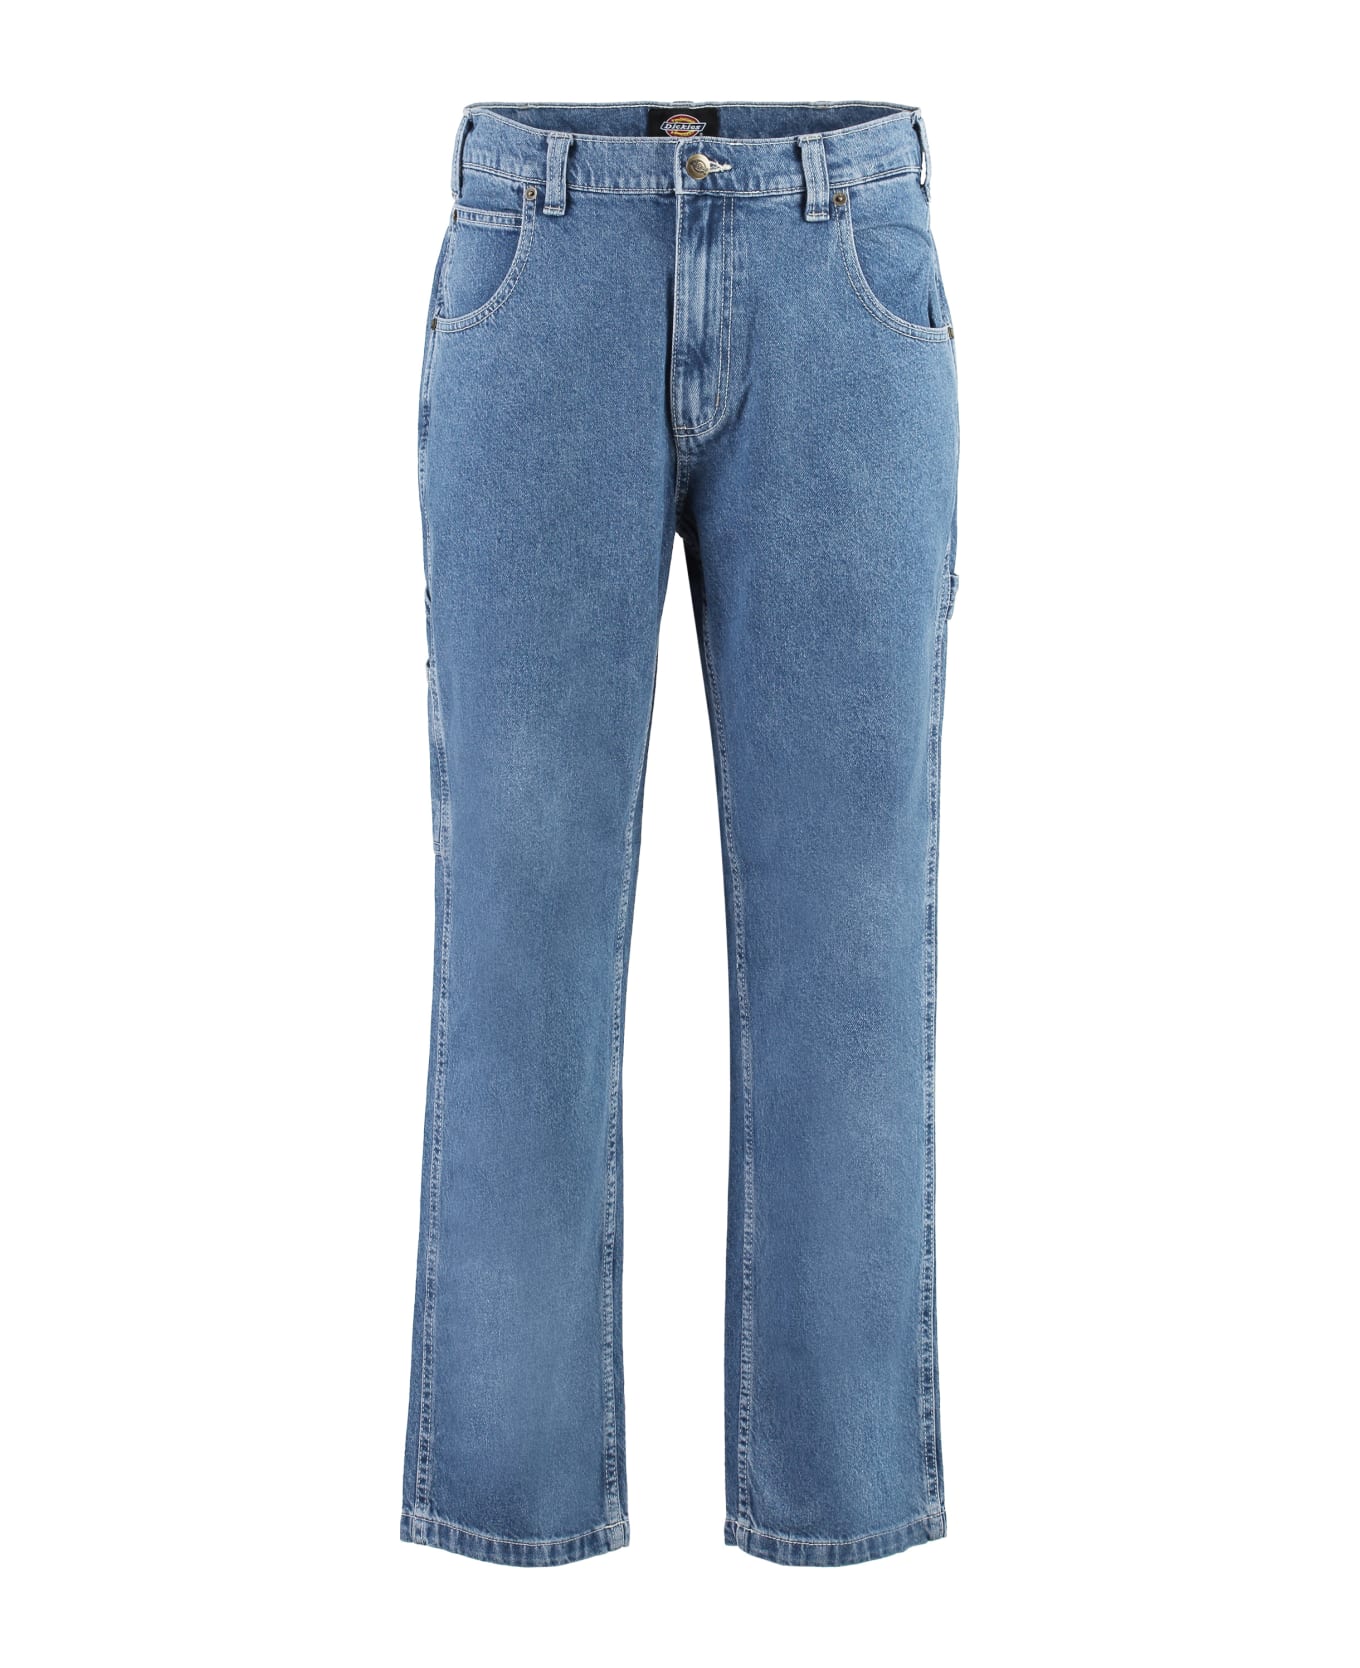 Dickies Garyville Regular Fit Jeans - Denim